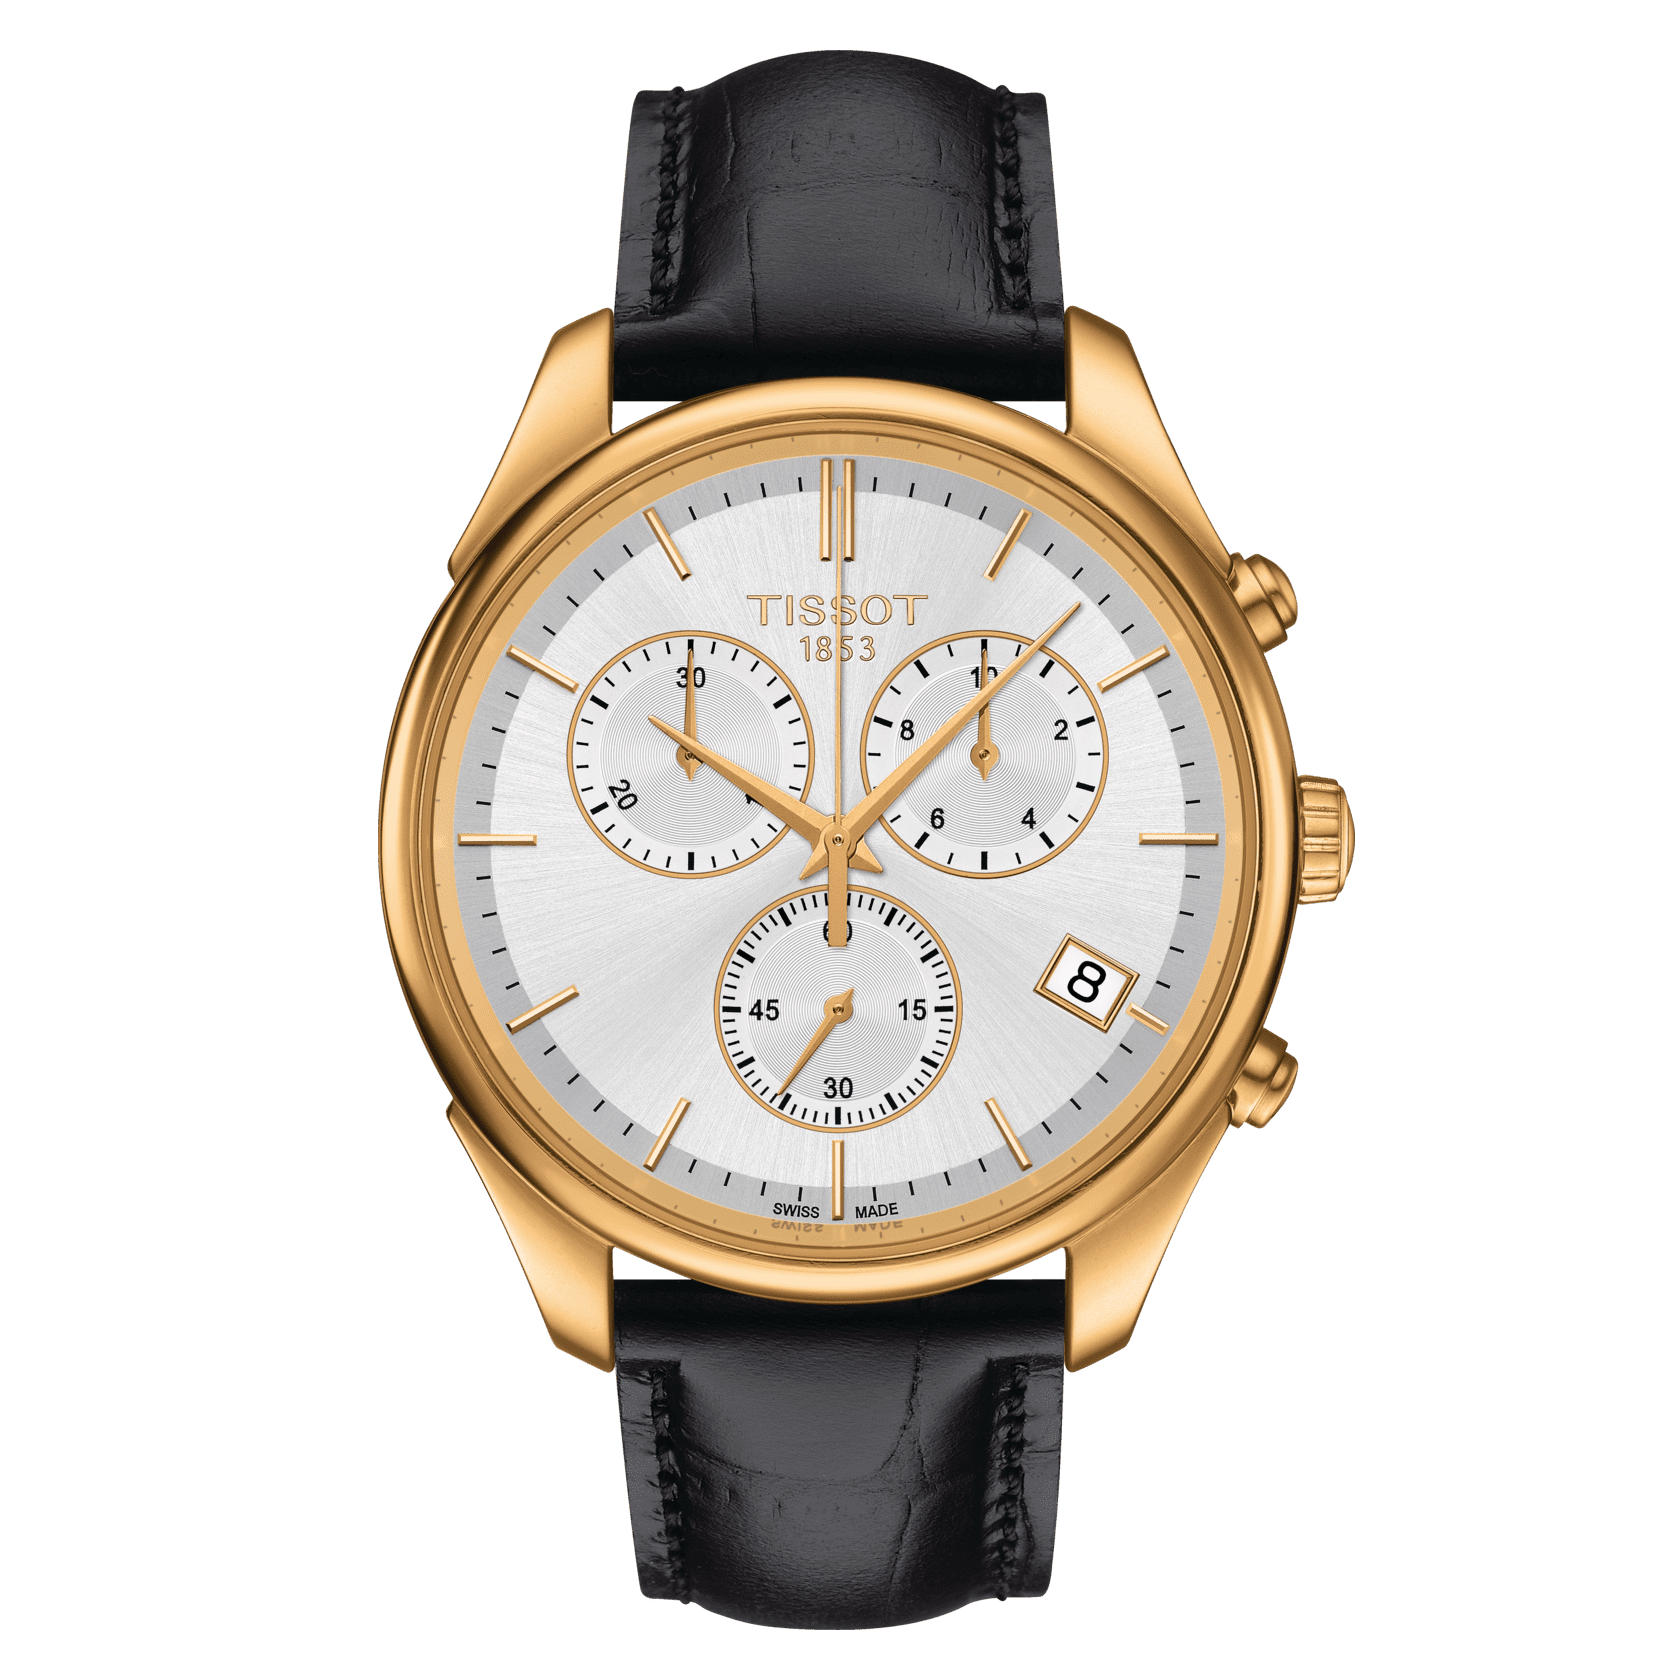 Noob Rolex Copy Watches For Sale